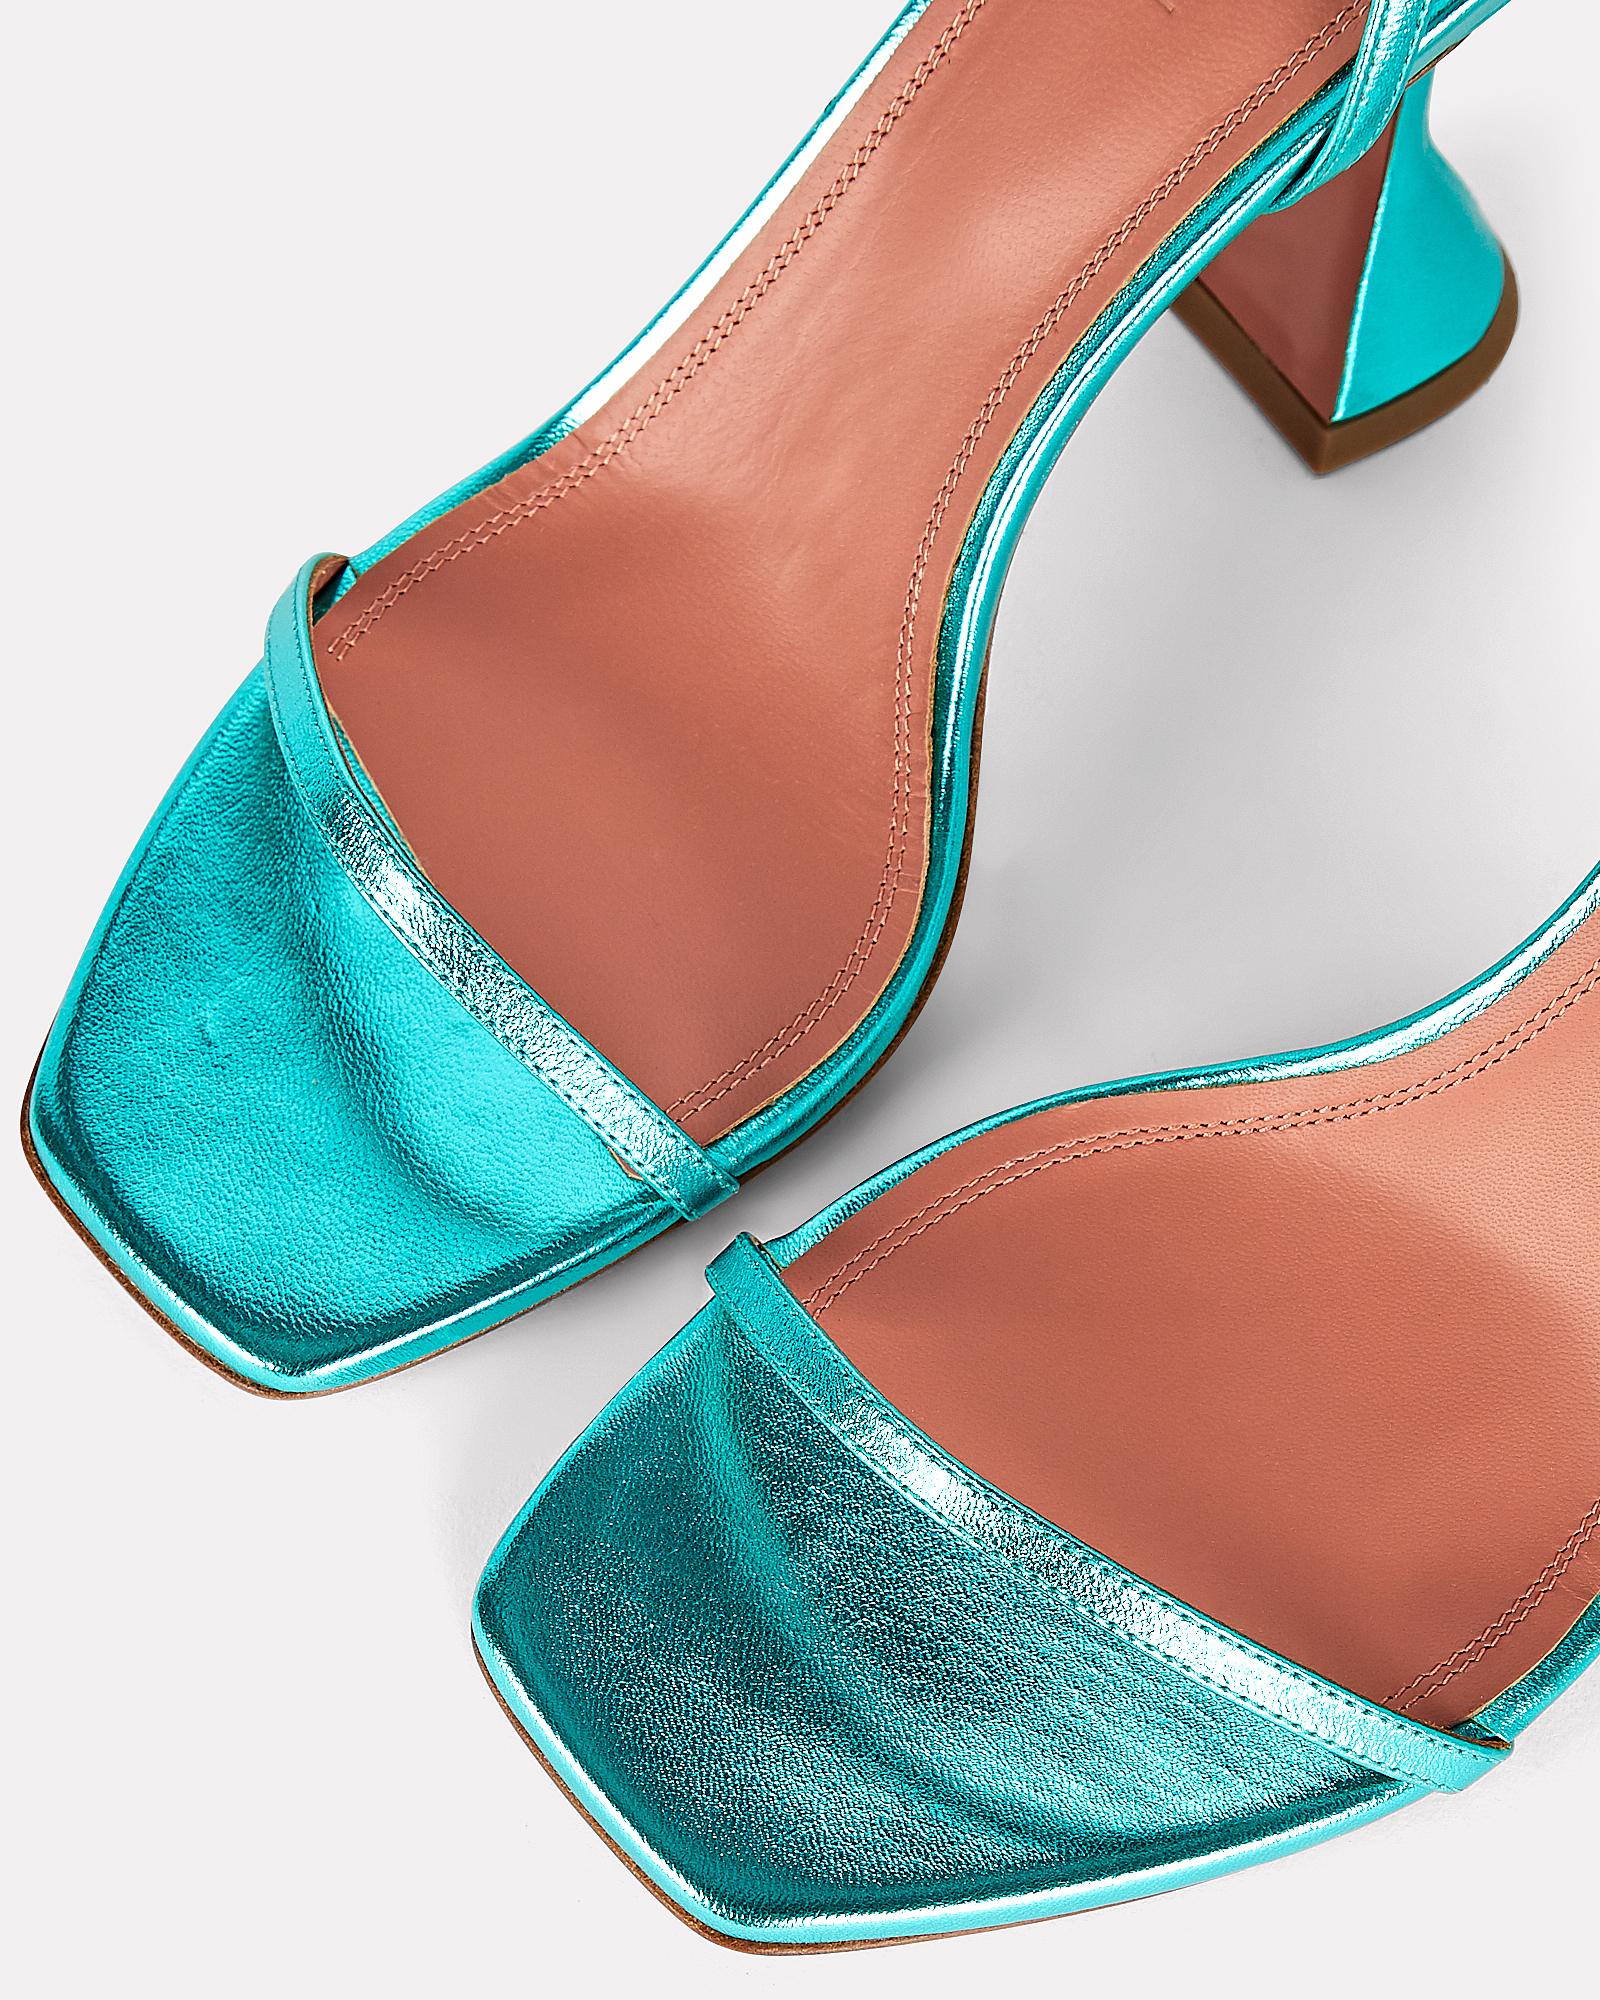 Amina Muaddi Vita Leather Wrap Sandals | INTERMIX®